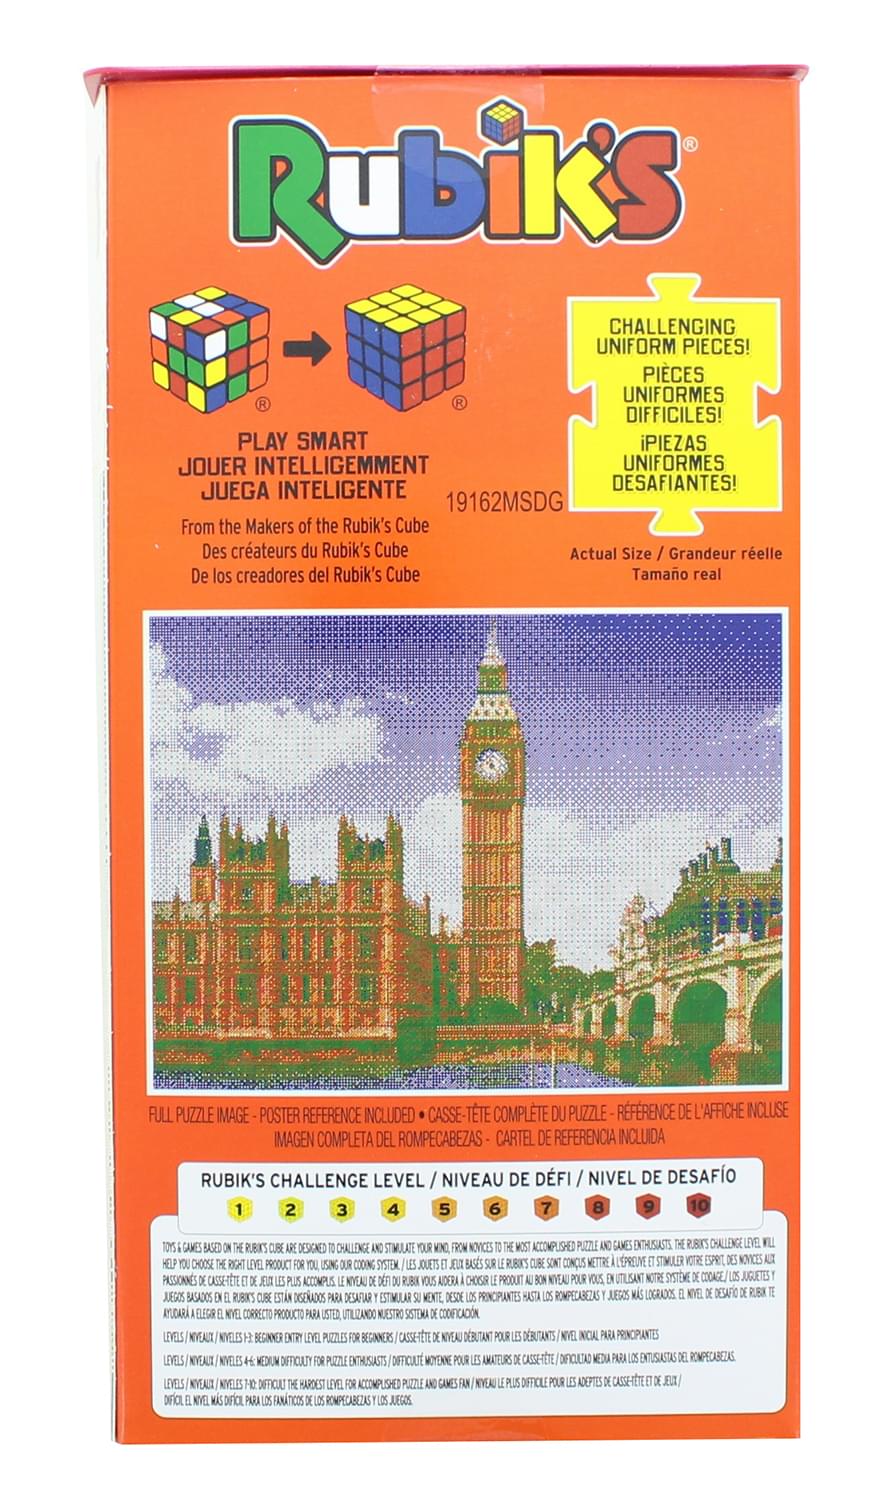 Rubiks 300 Piece Jigsaw Puzzle | Big Ben